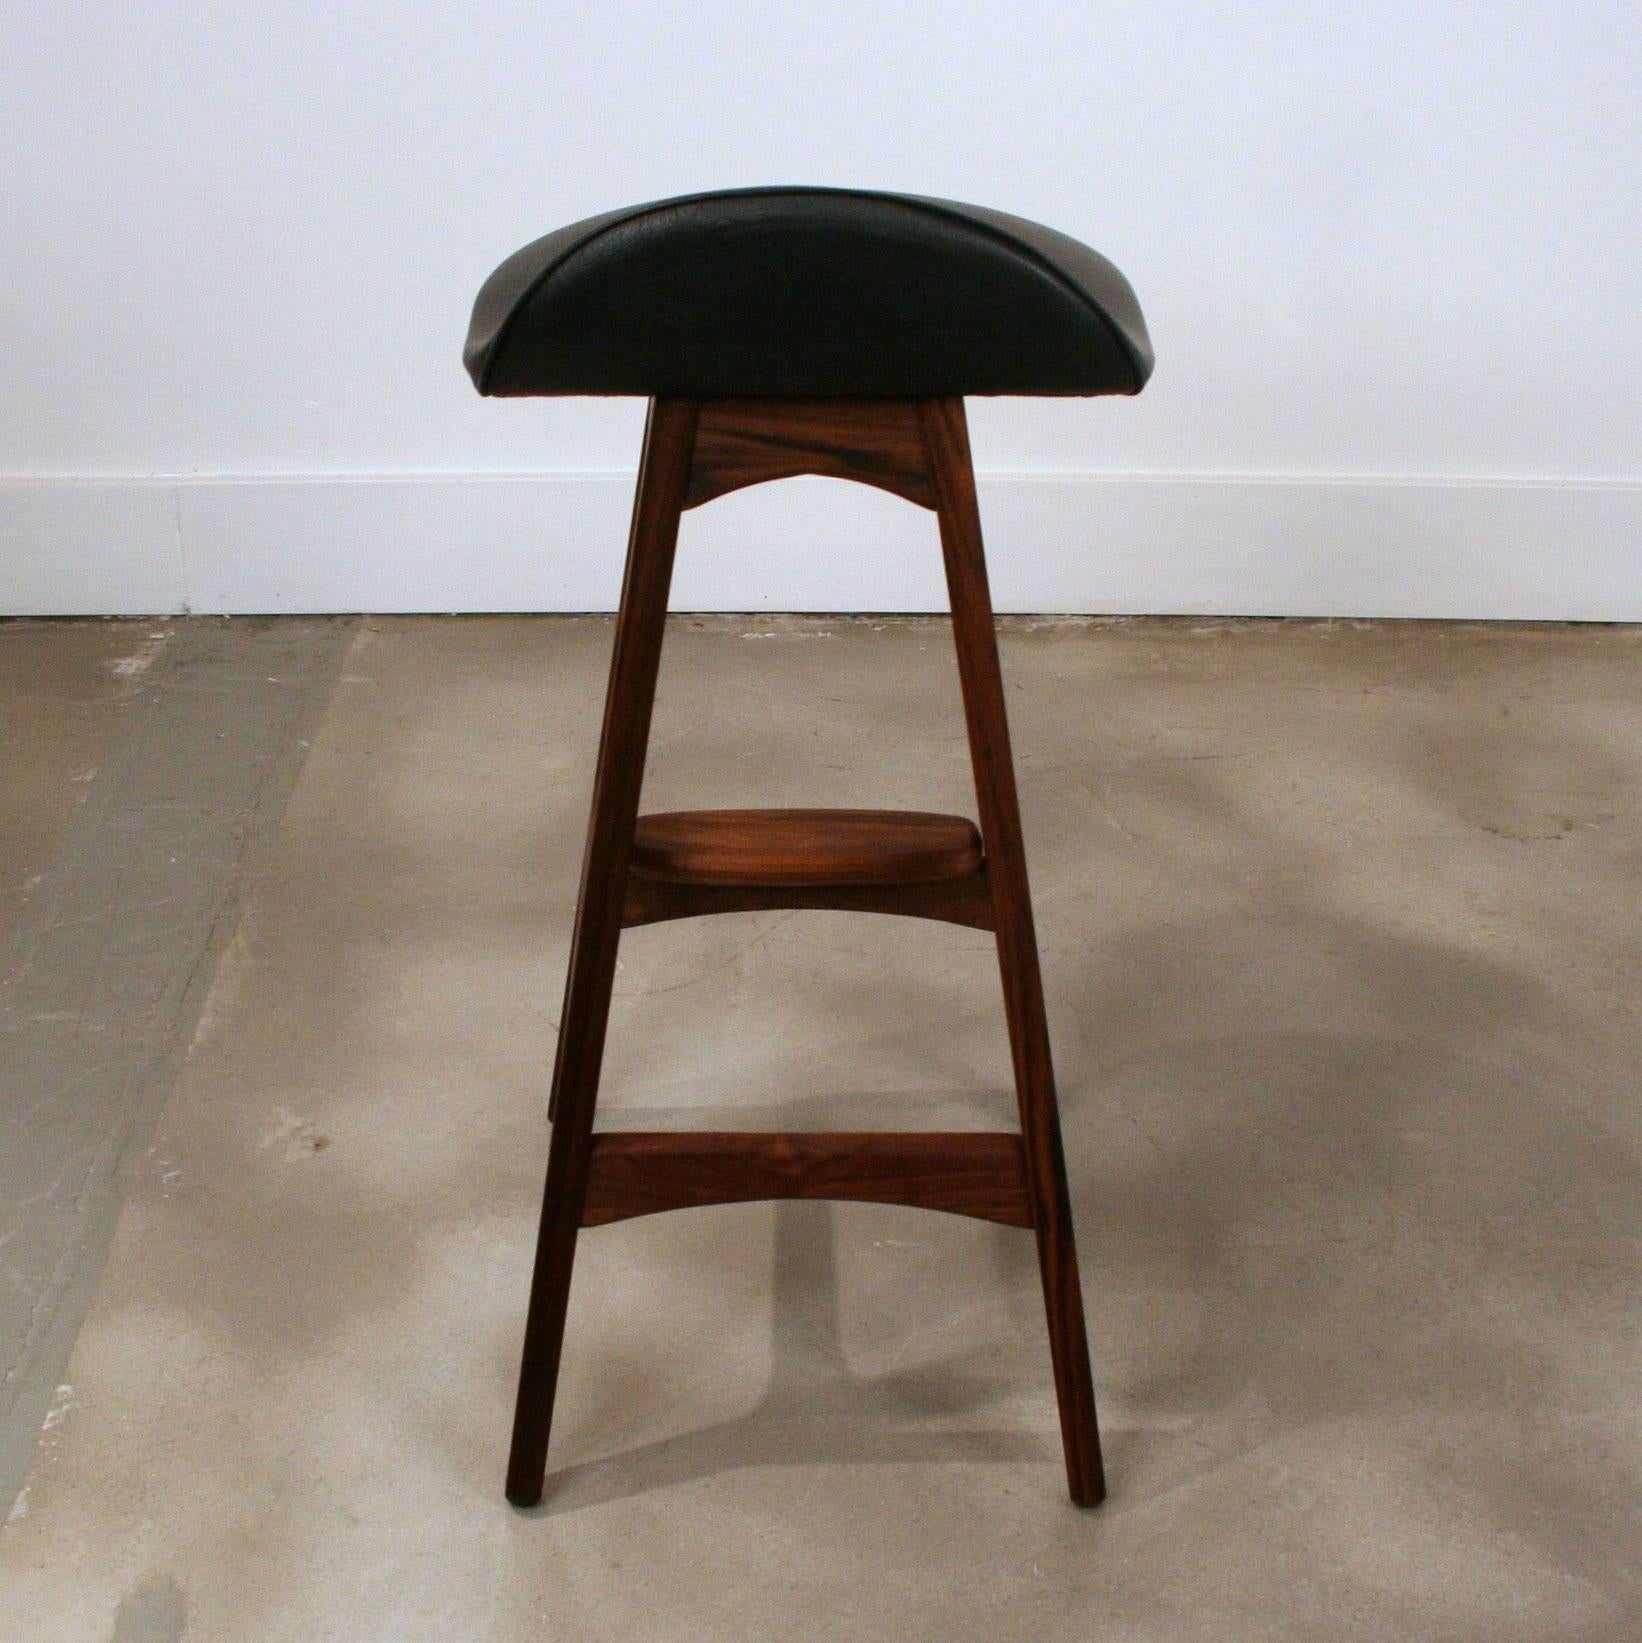 Vintage inspired bar stools by designer Erik Buck. Solid teak with beautiful graining and black vinyl seat. Made in Denmark. Measures: 27